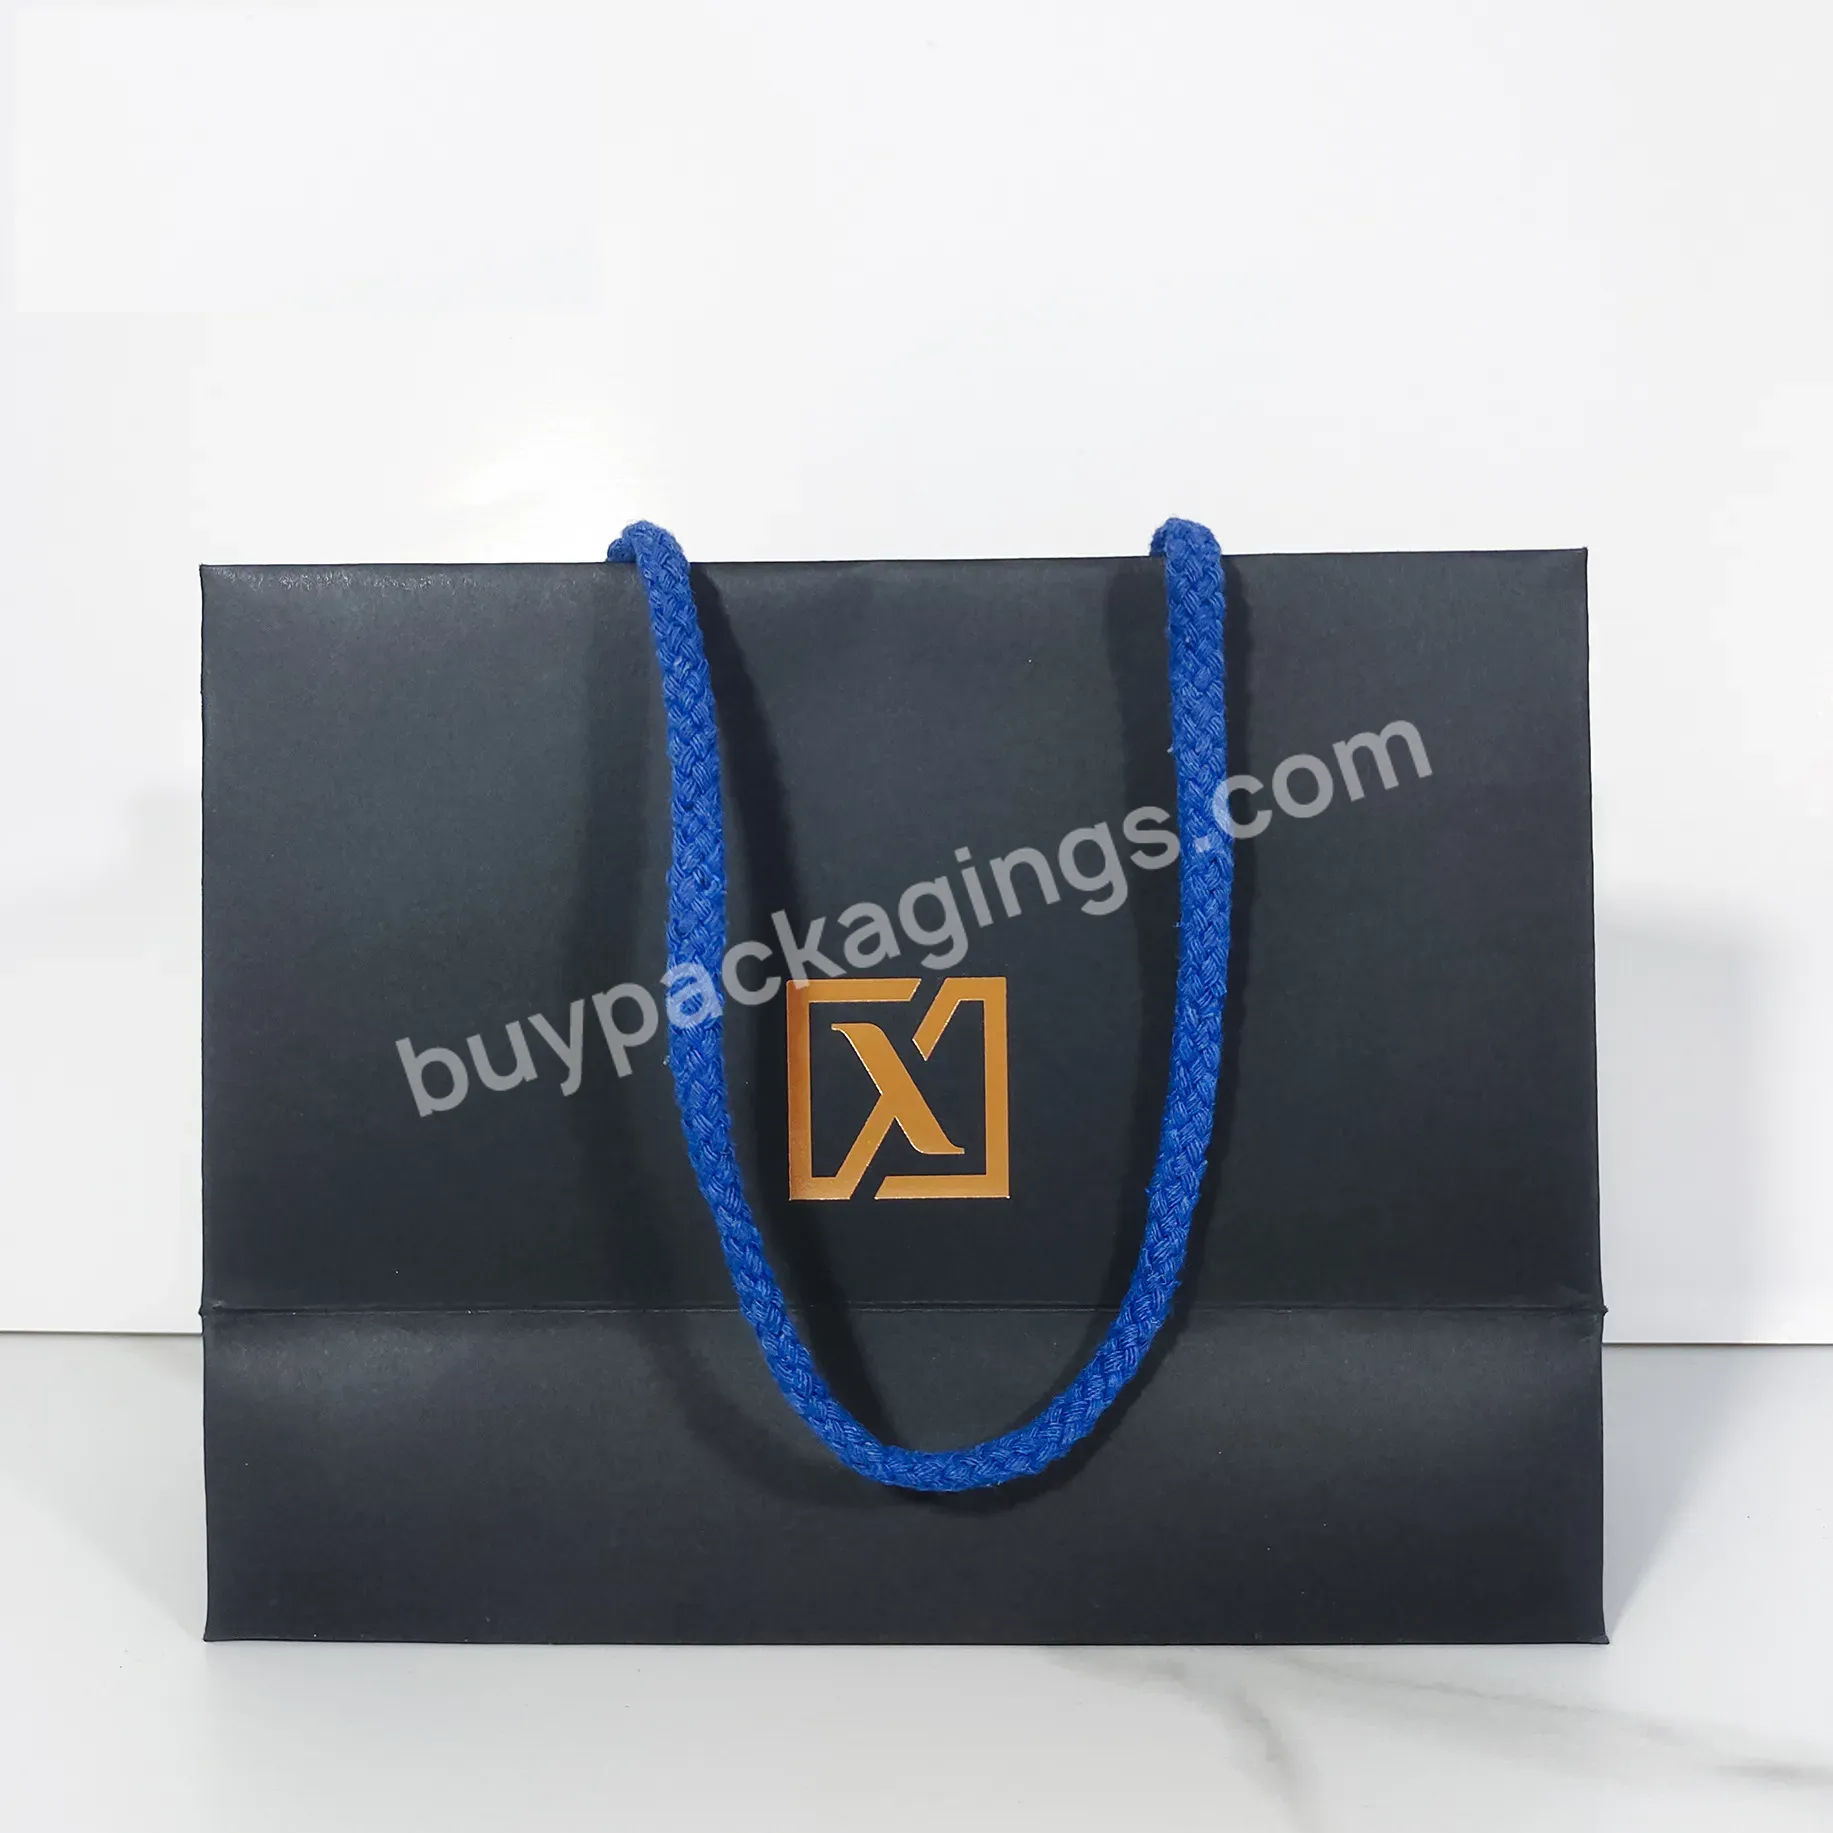 Low Moq Custom Design Matt Black Printed Luxury Shopping Paper Gift Bags With Uv Spot Logos Print